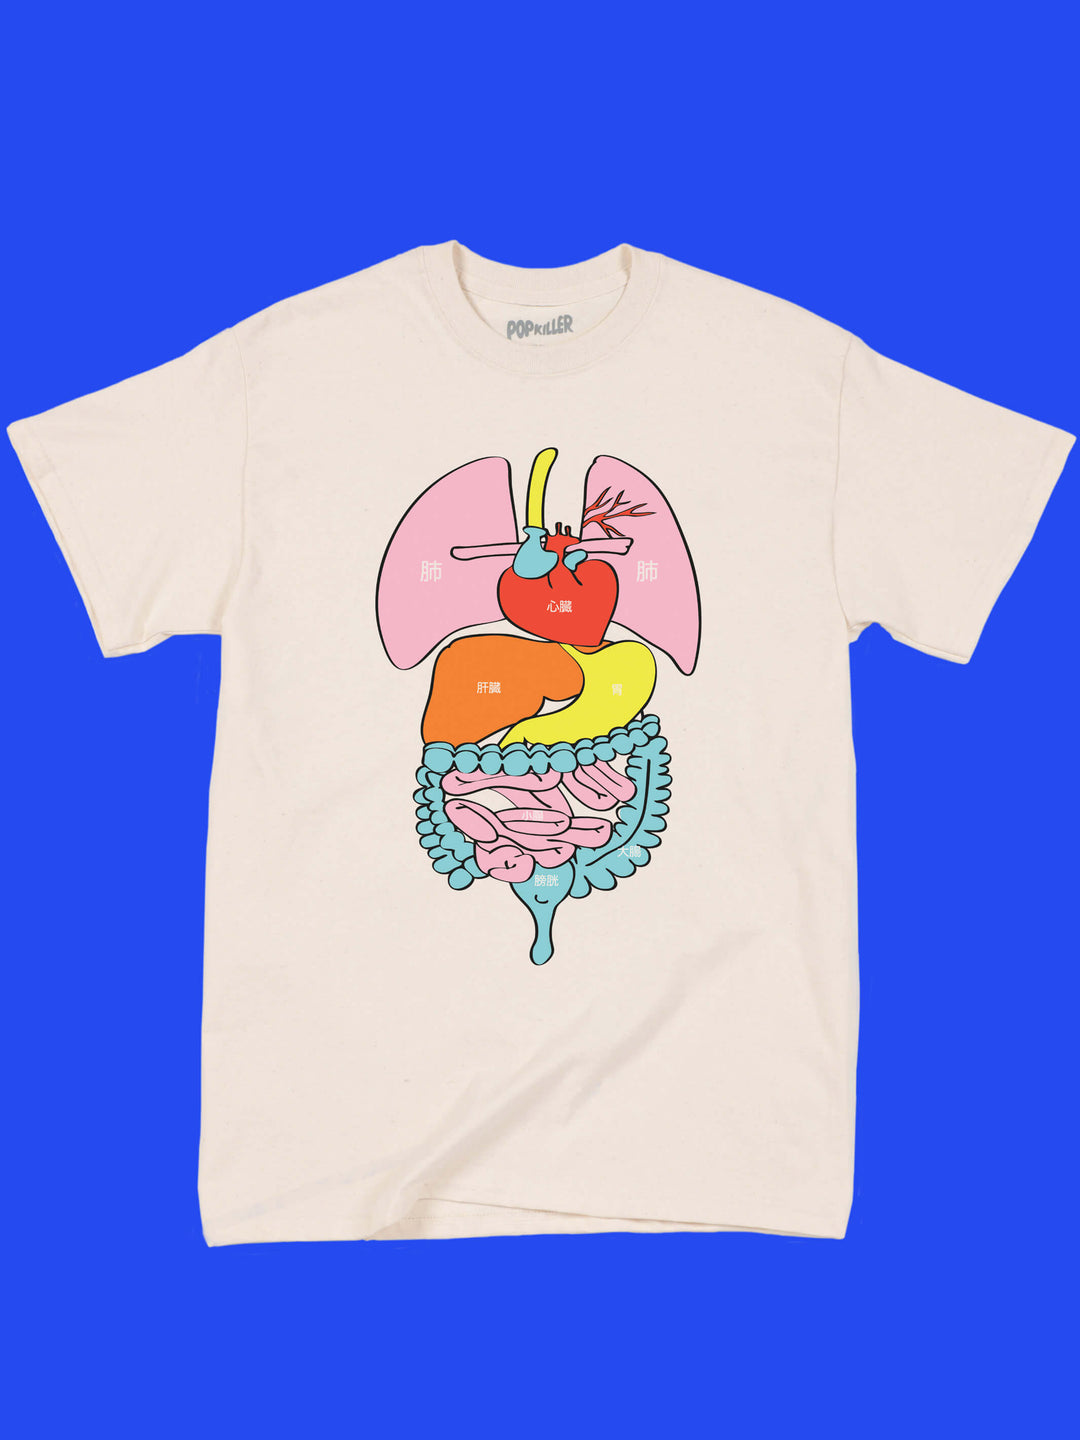 Japanese medical diagram t-shirt.